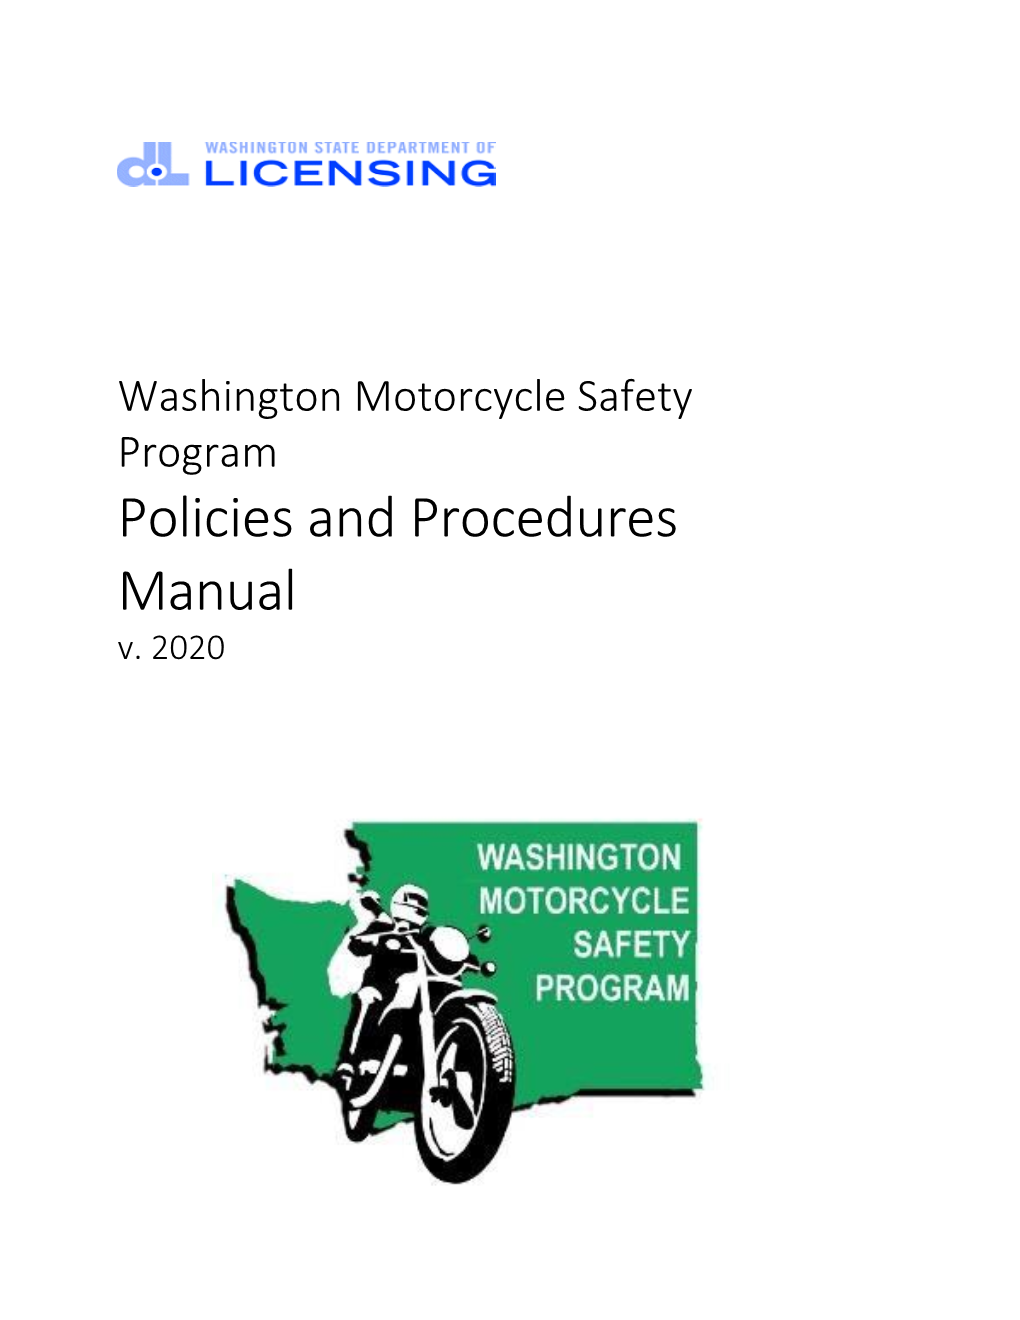 Washington Motorcycle Safety Program Policies and Procedures Manual V